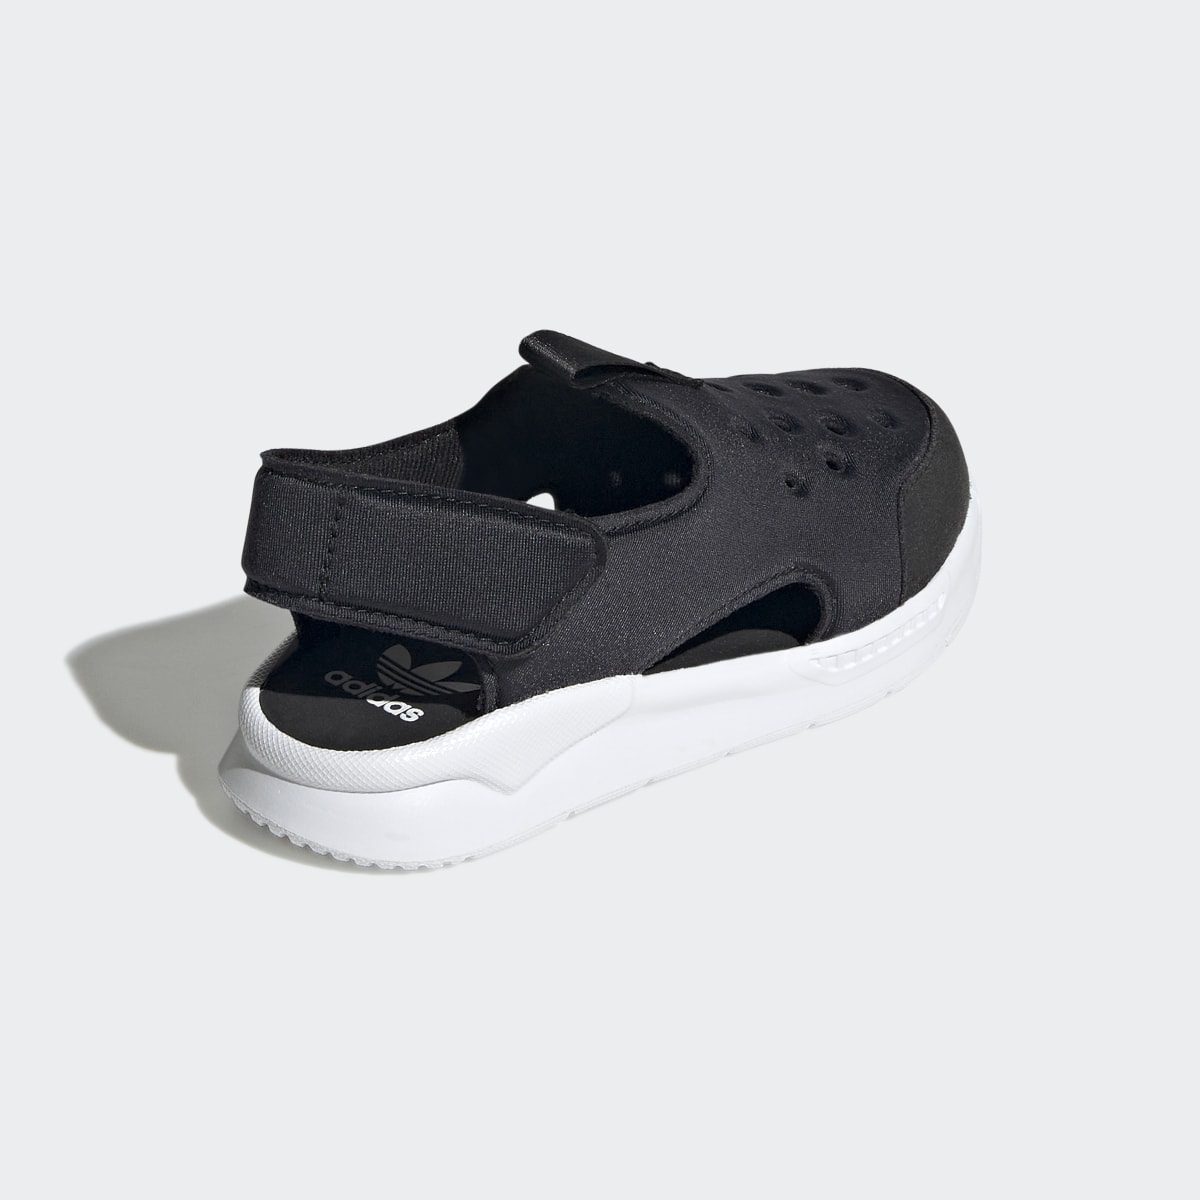 Adidas 360 2.0 Sandals. 6